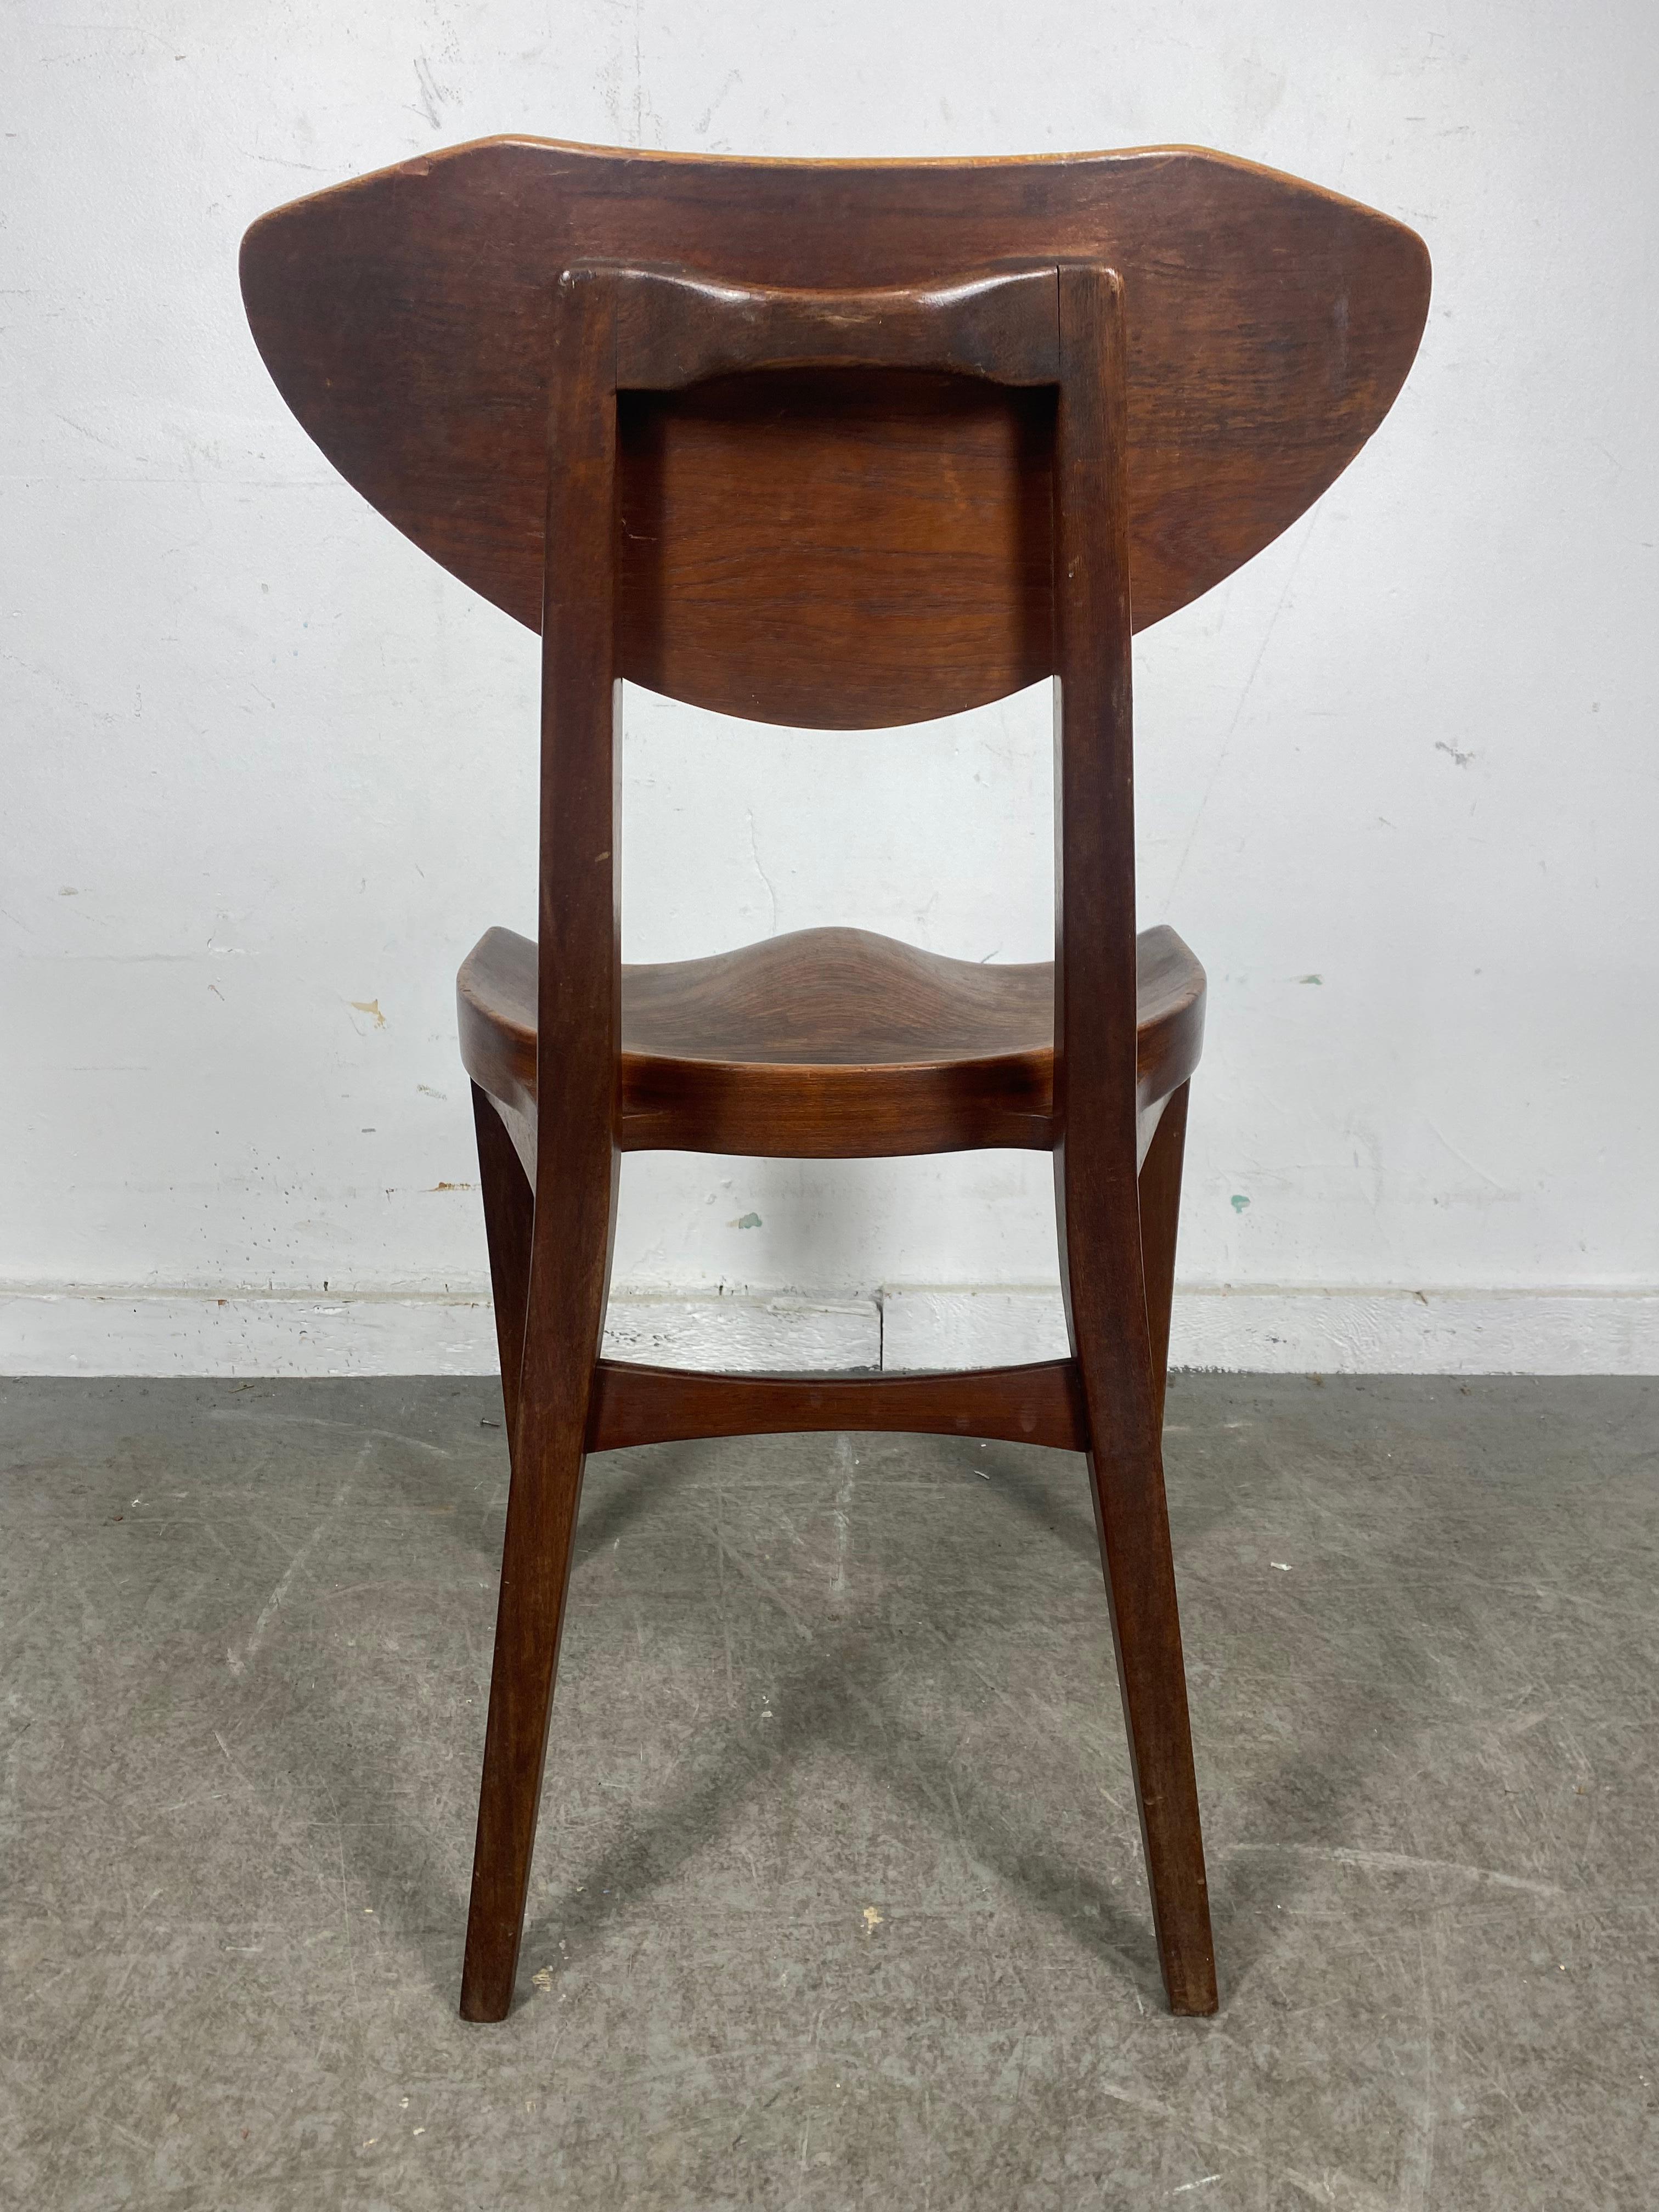 Mid-20th Century Modernist Sculptural Chair Designed by Richard Jensen and Kjaerulff Rasmusse